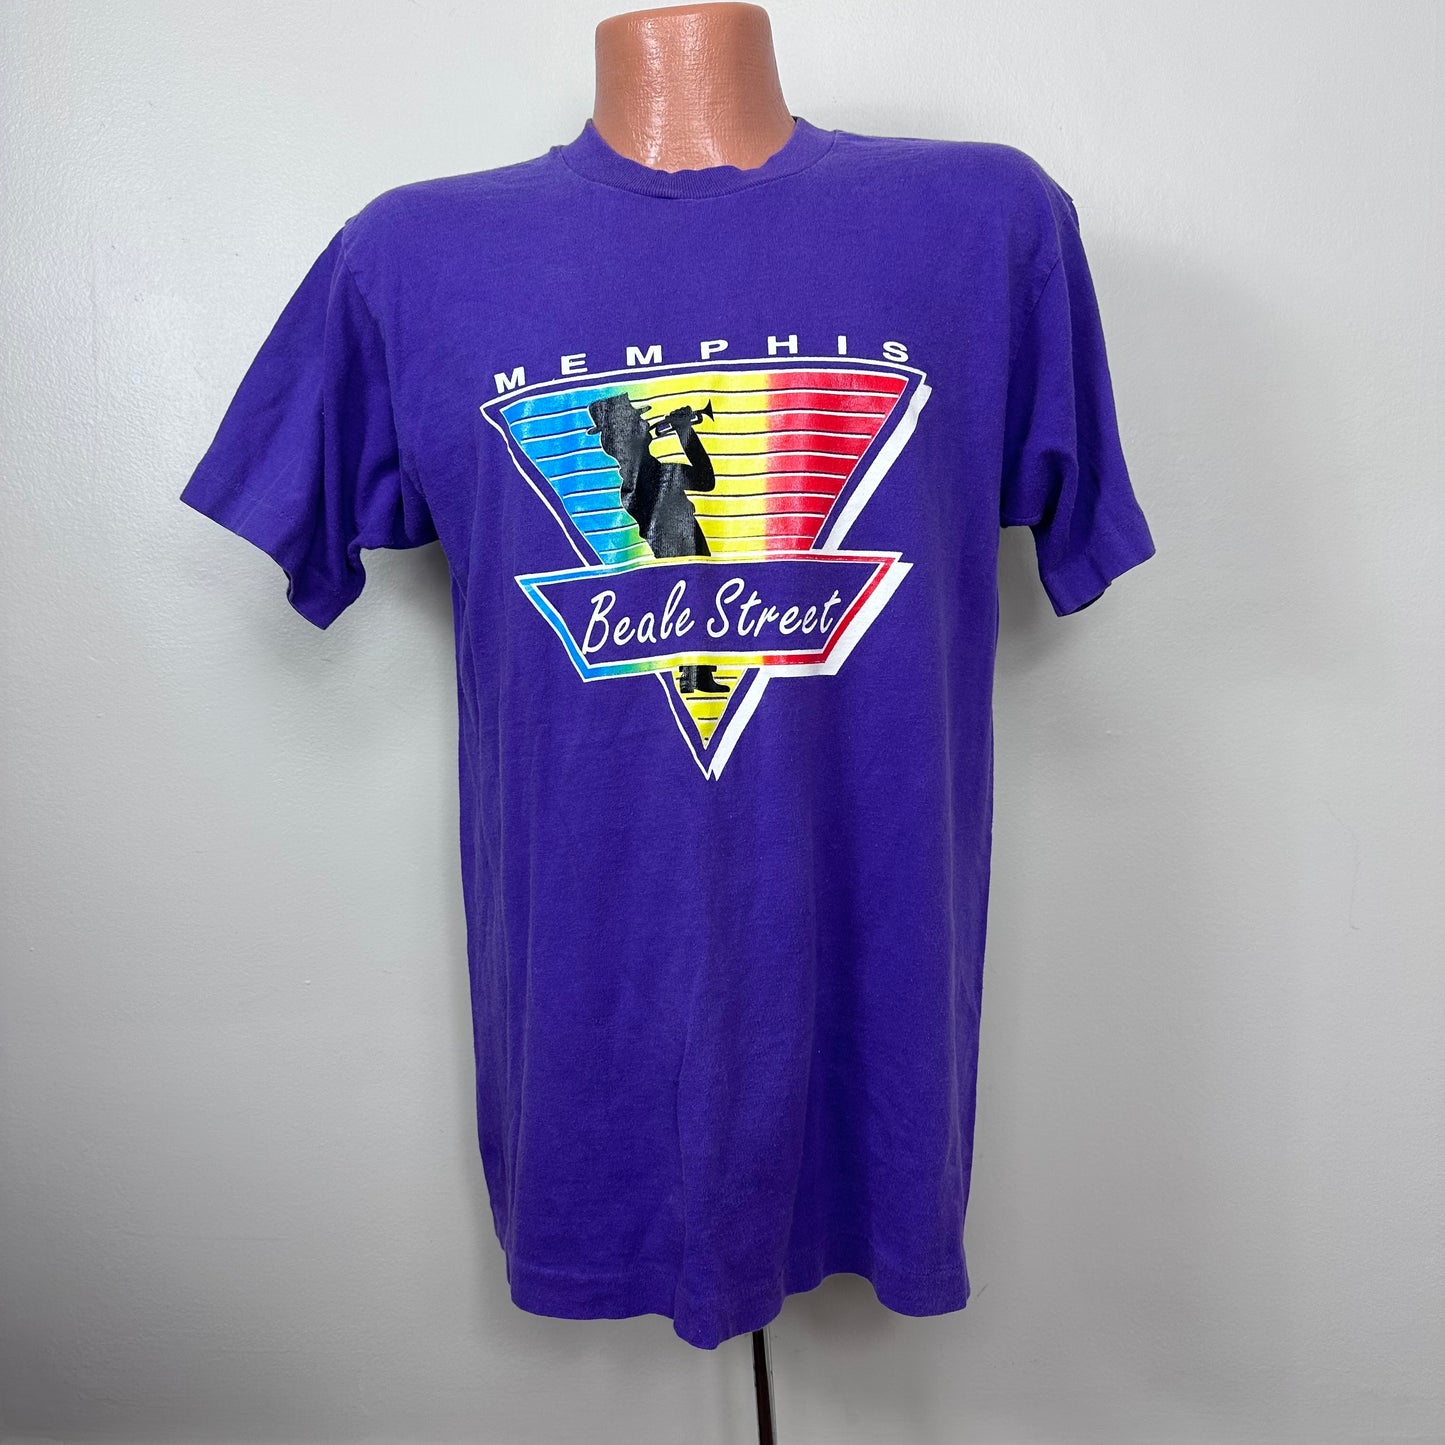 1990s Memphis Beale Street T-Shirt, Fruit of the Loom Size M/L